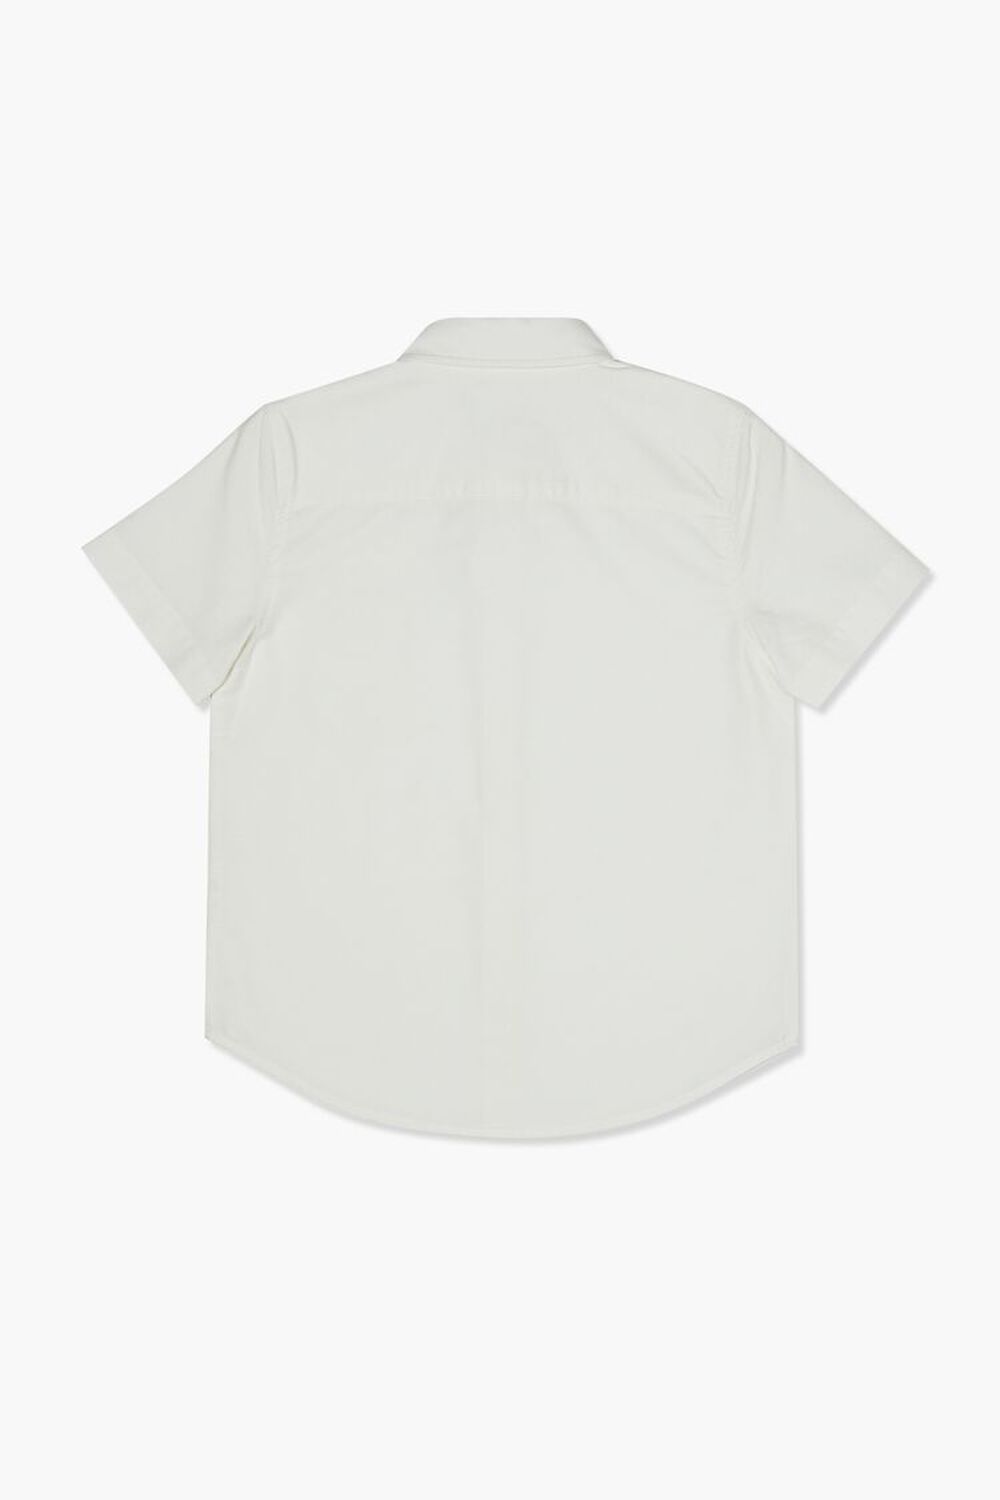 WHITE Kids Cotton Pocket Shirt (Girls + Boys), image 2